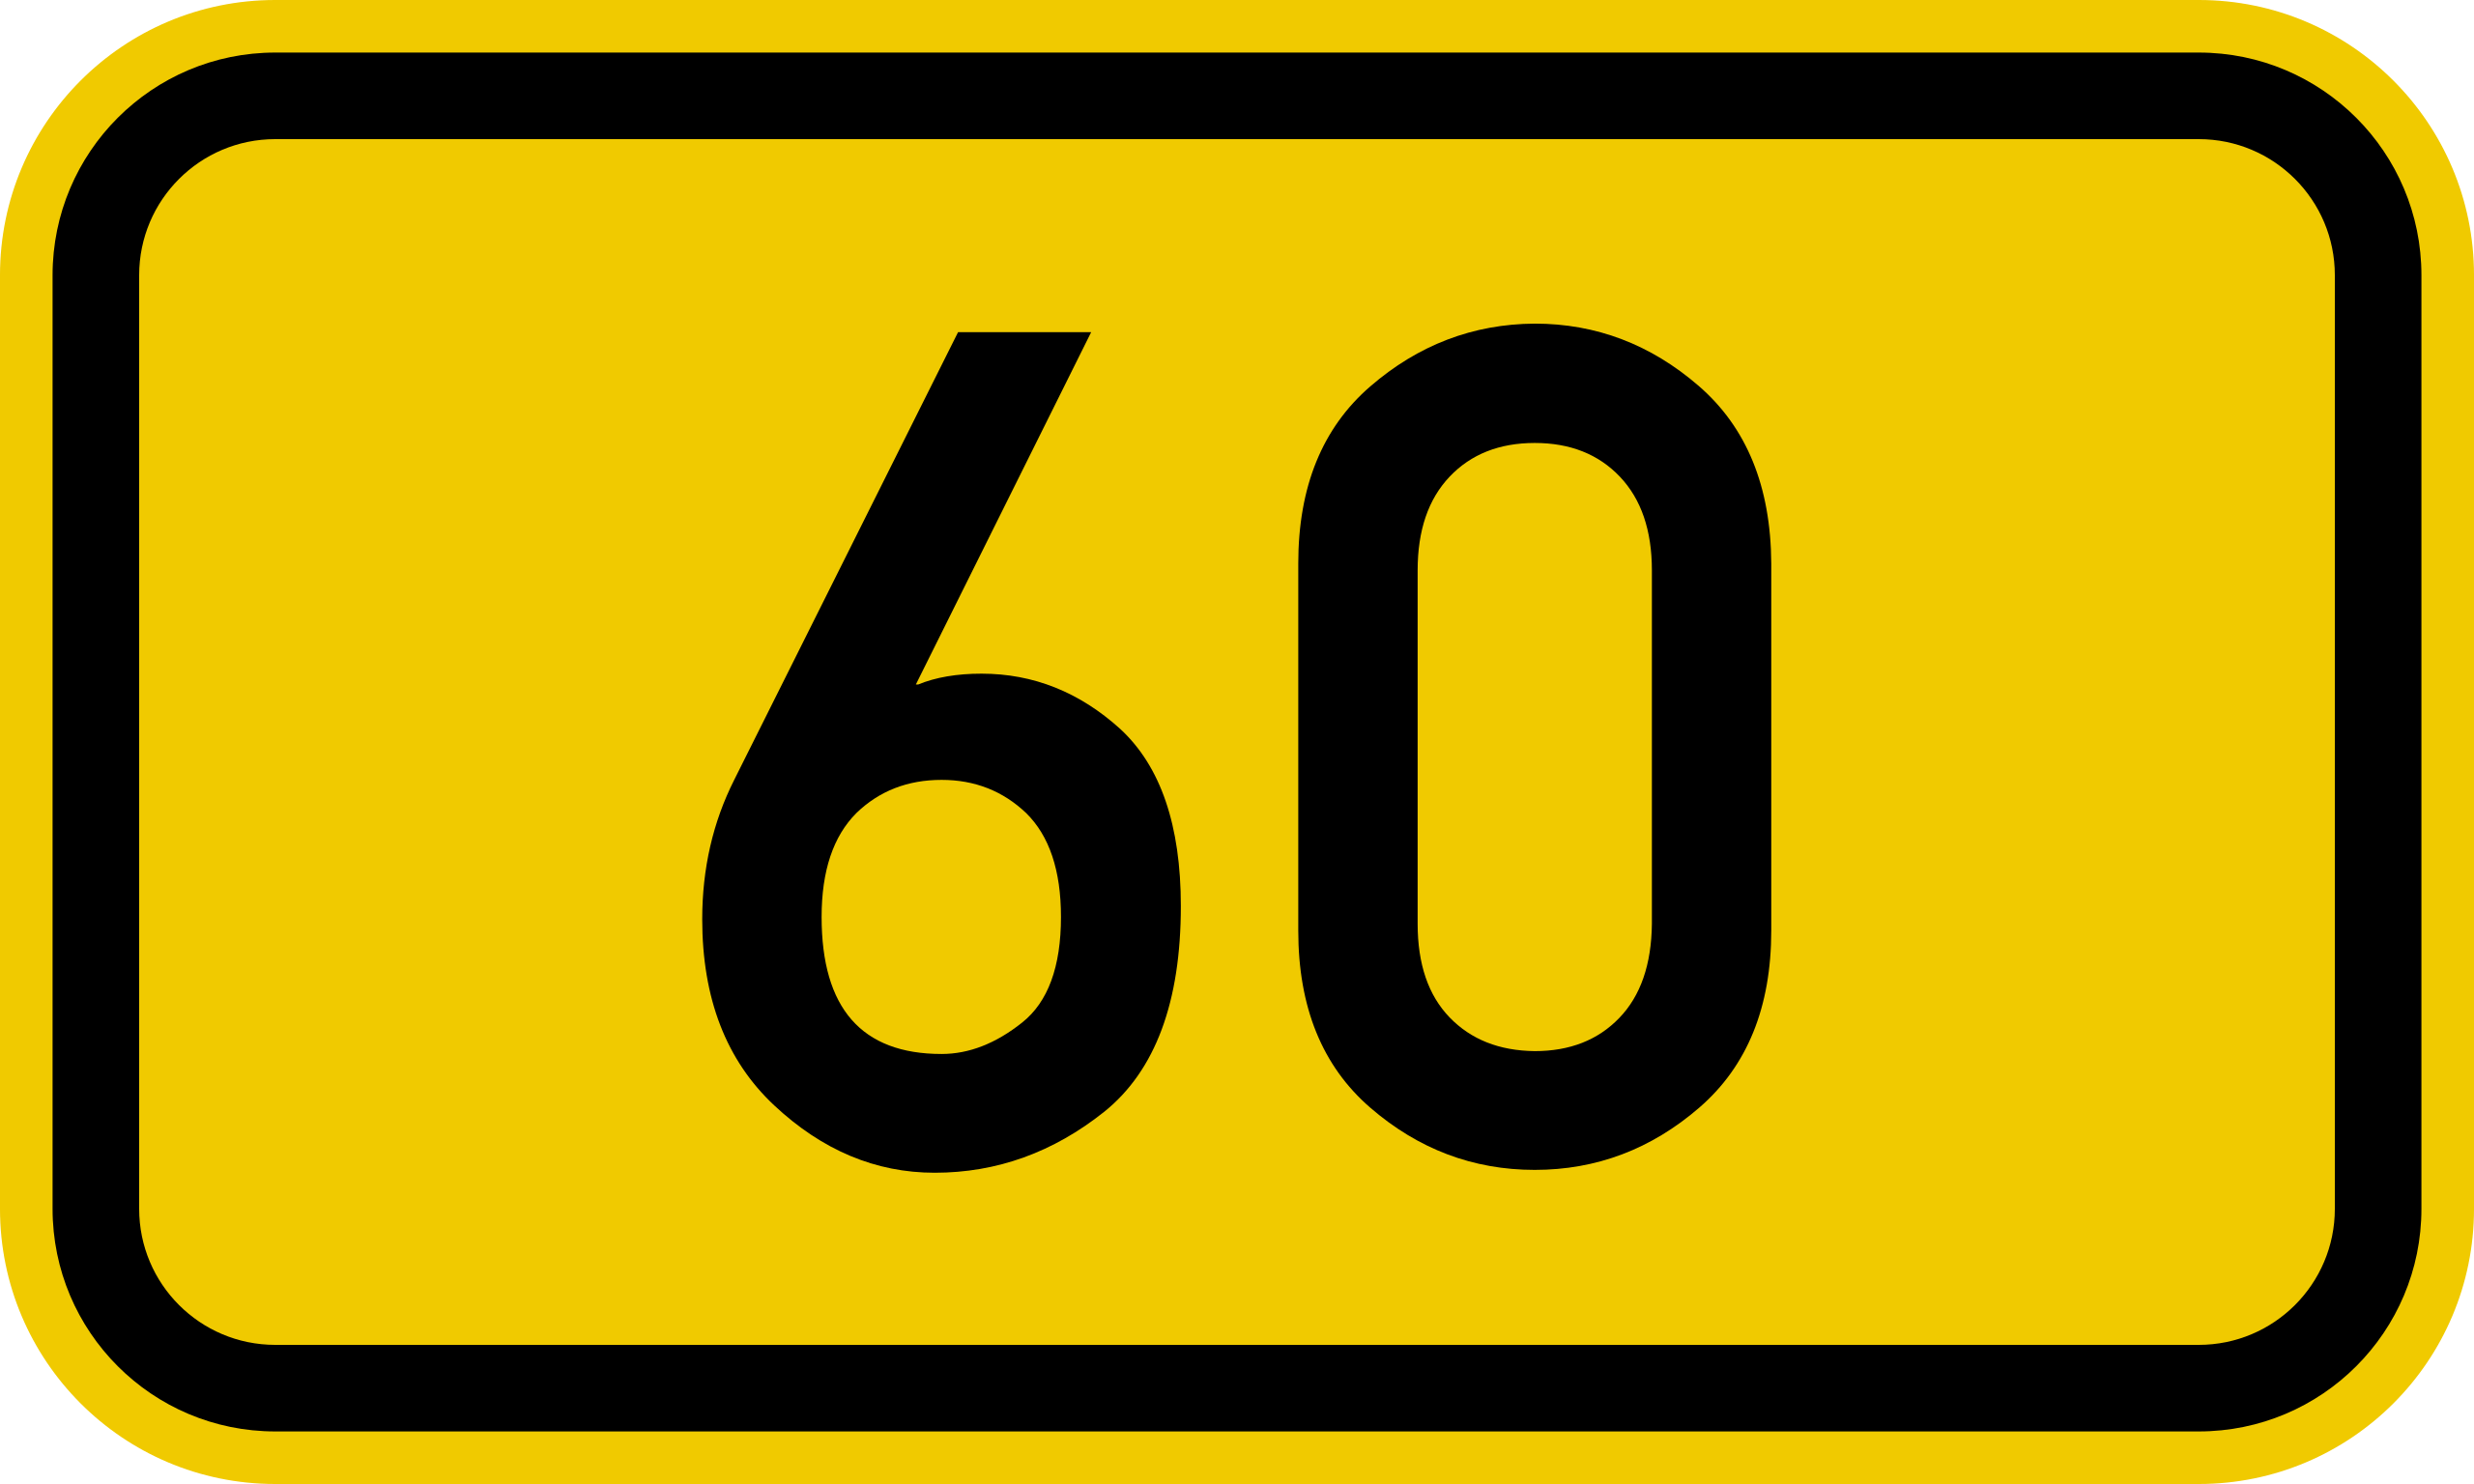 File:Bundesstraße 60 number.svg - Wikimedia Commons